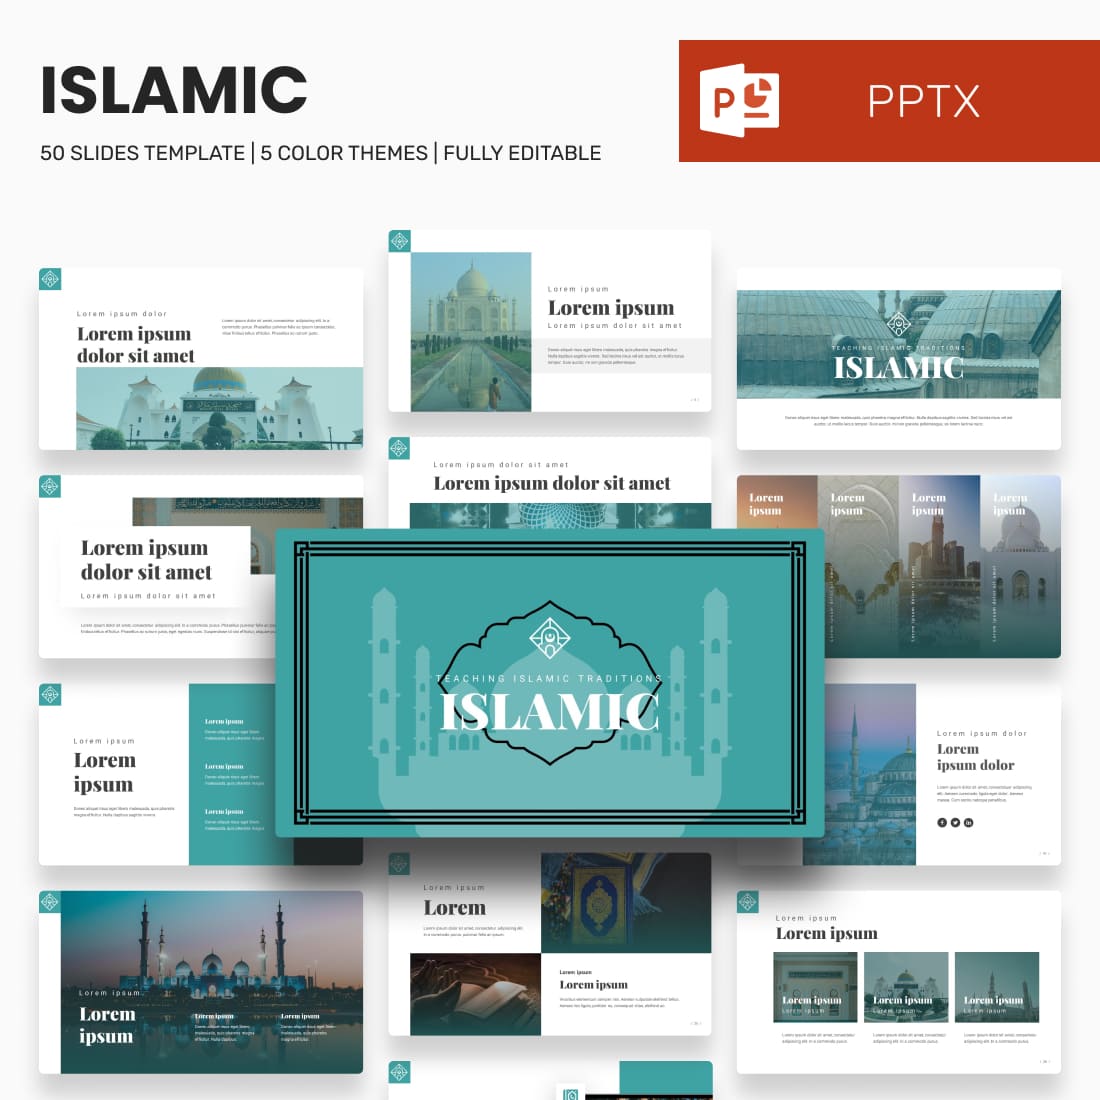 Islamic powerpoint template.